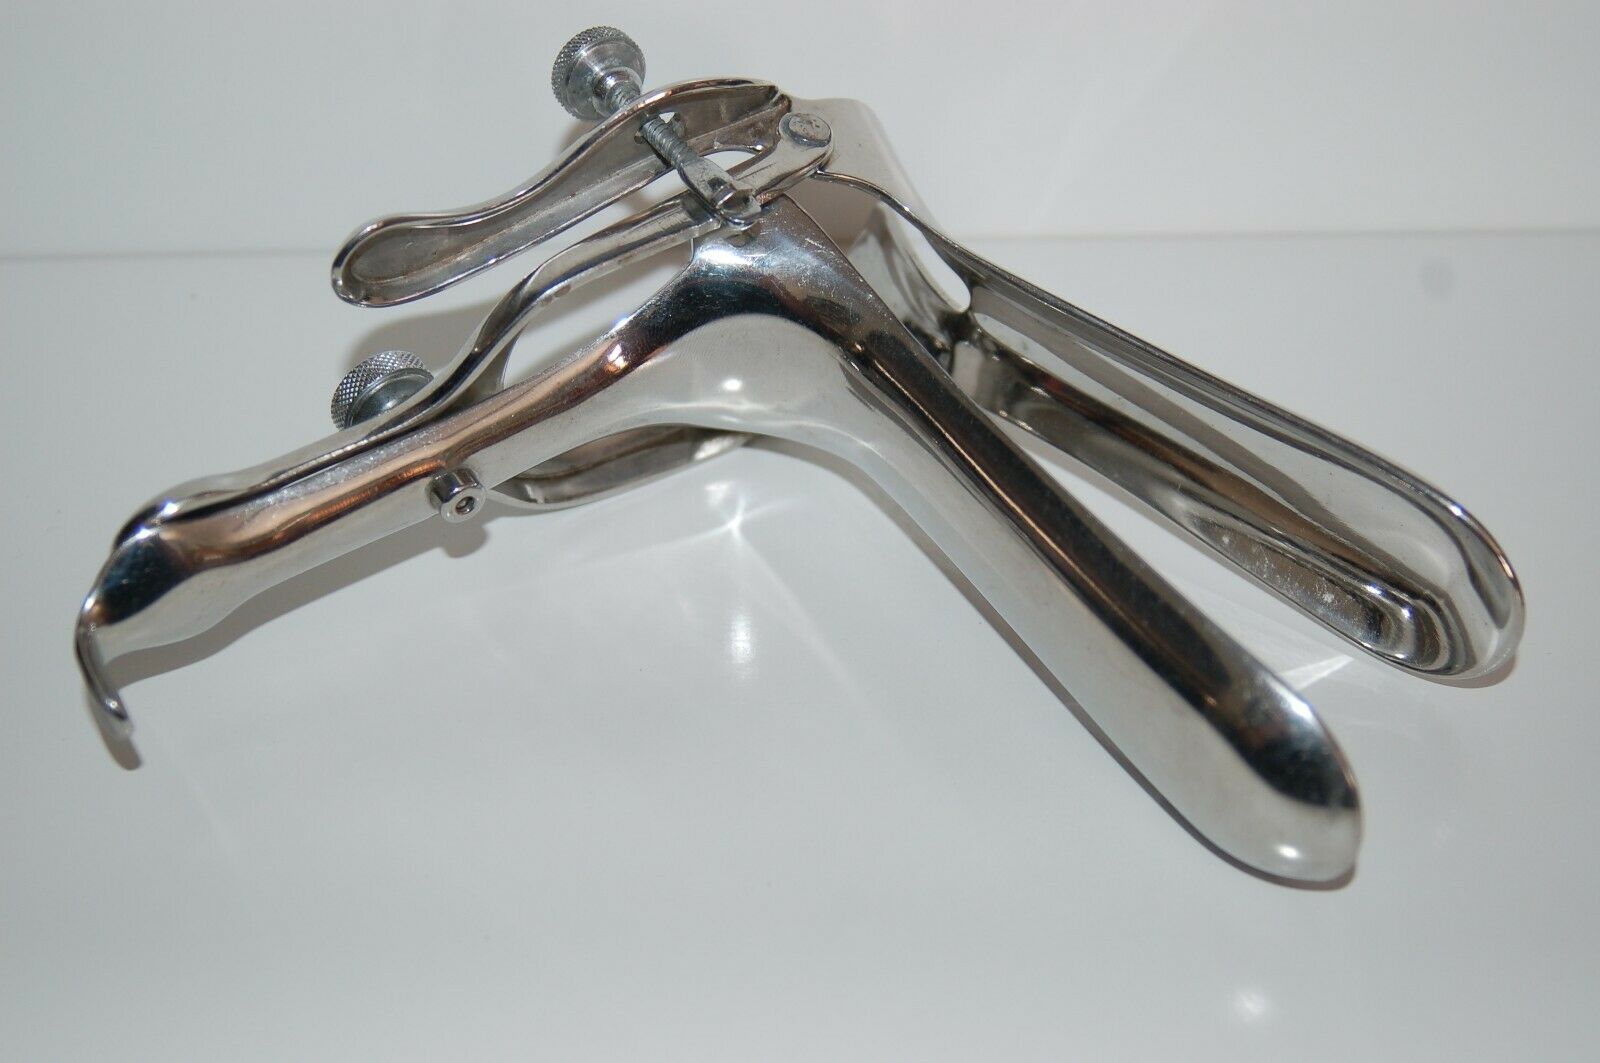 Vintage Vaginal Speculum Surgical / Exam Instrument